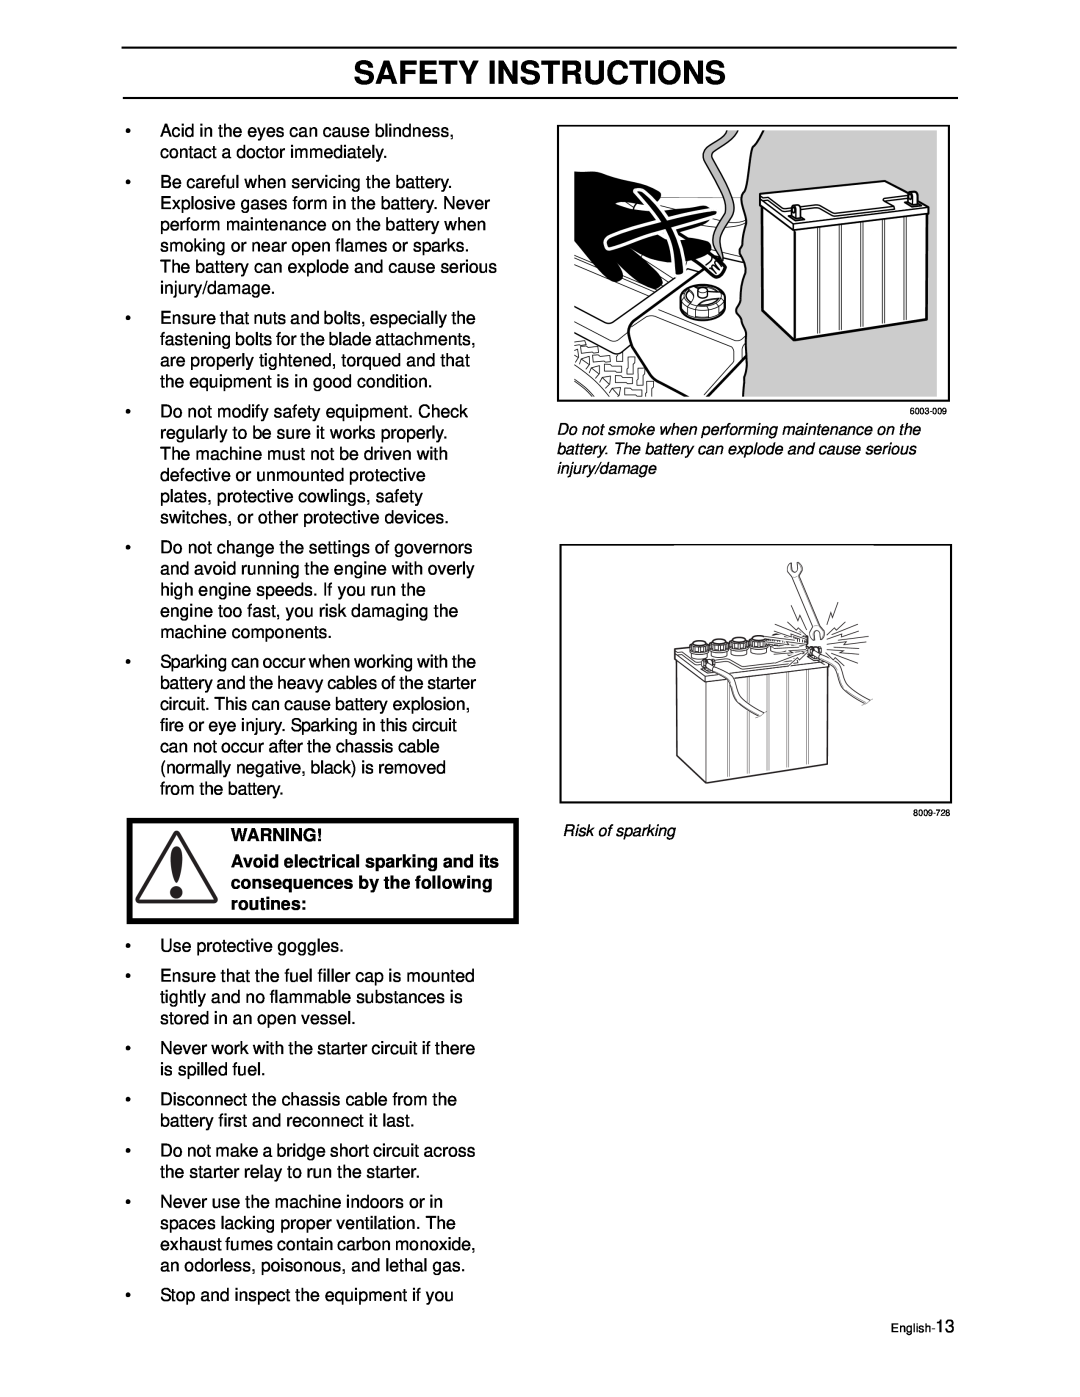 Husqvarna ZEKW42170, ZEKW52210 manual Safety Instructions, Risk of sparking, English-13 